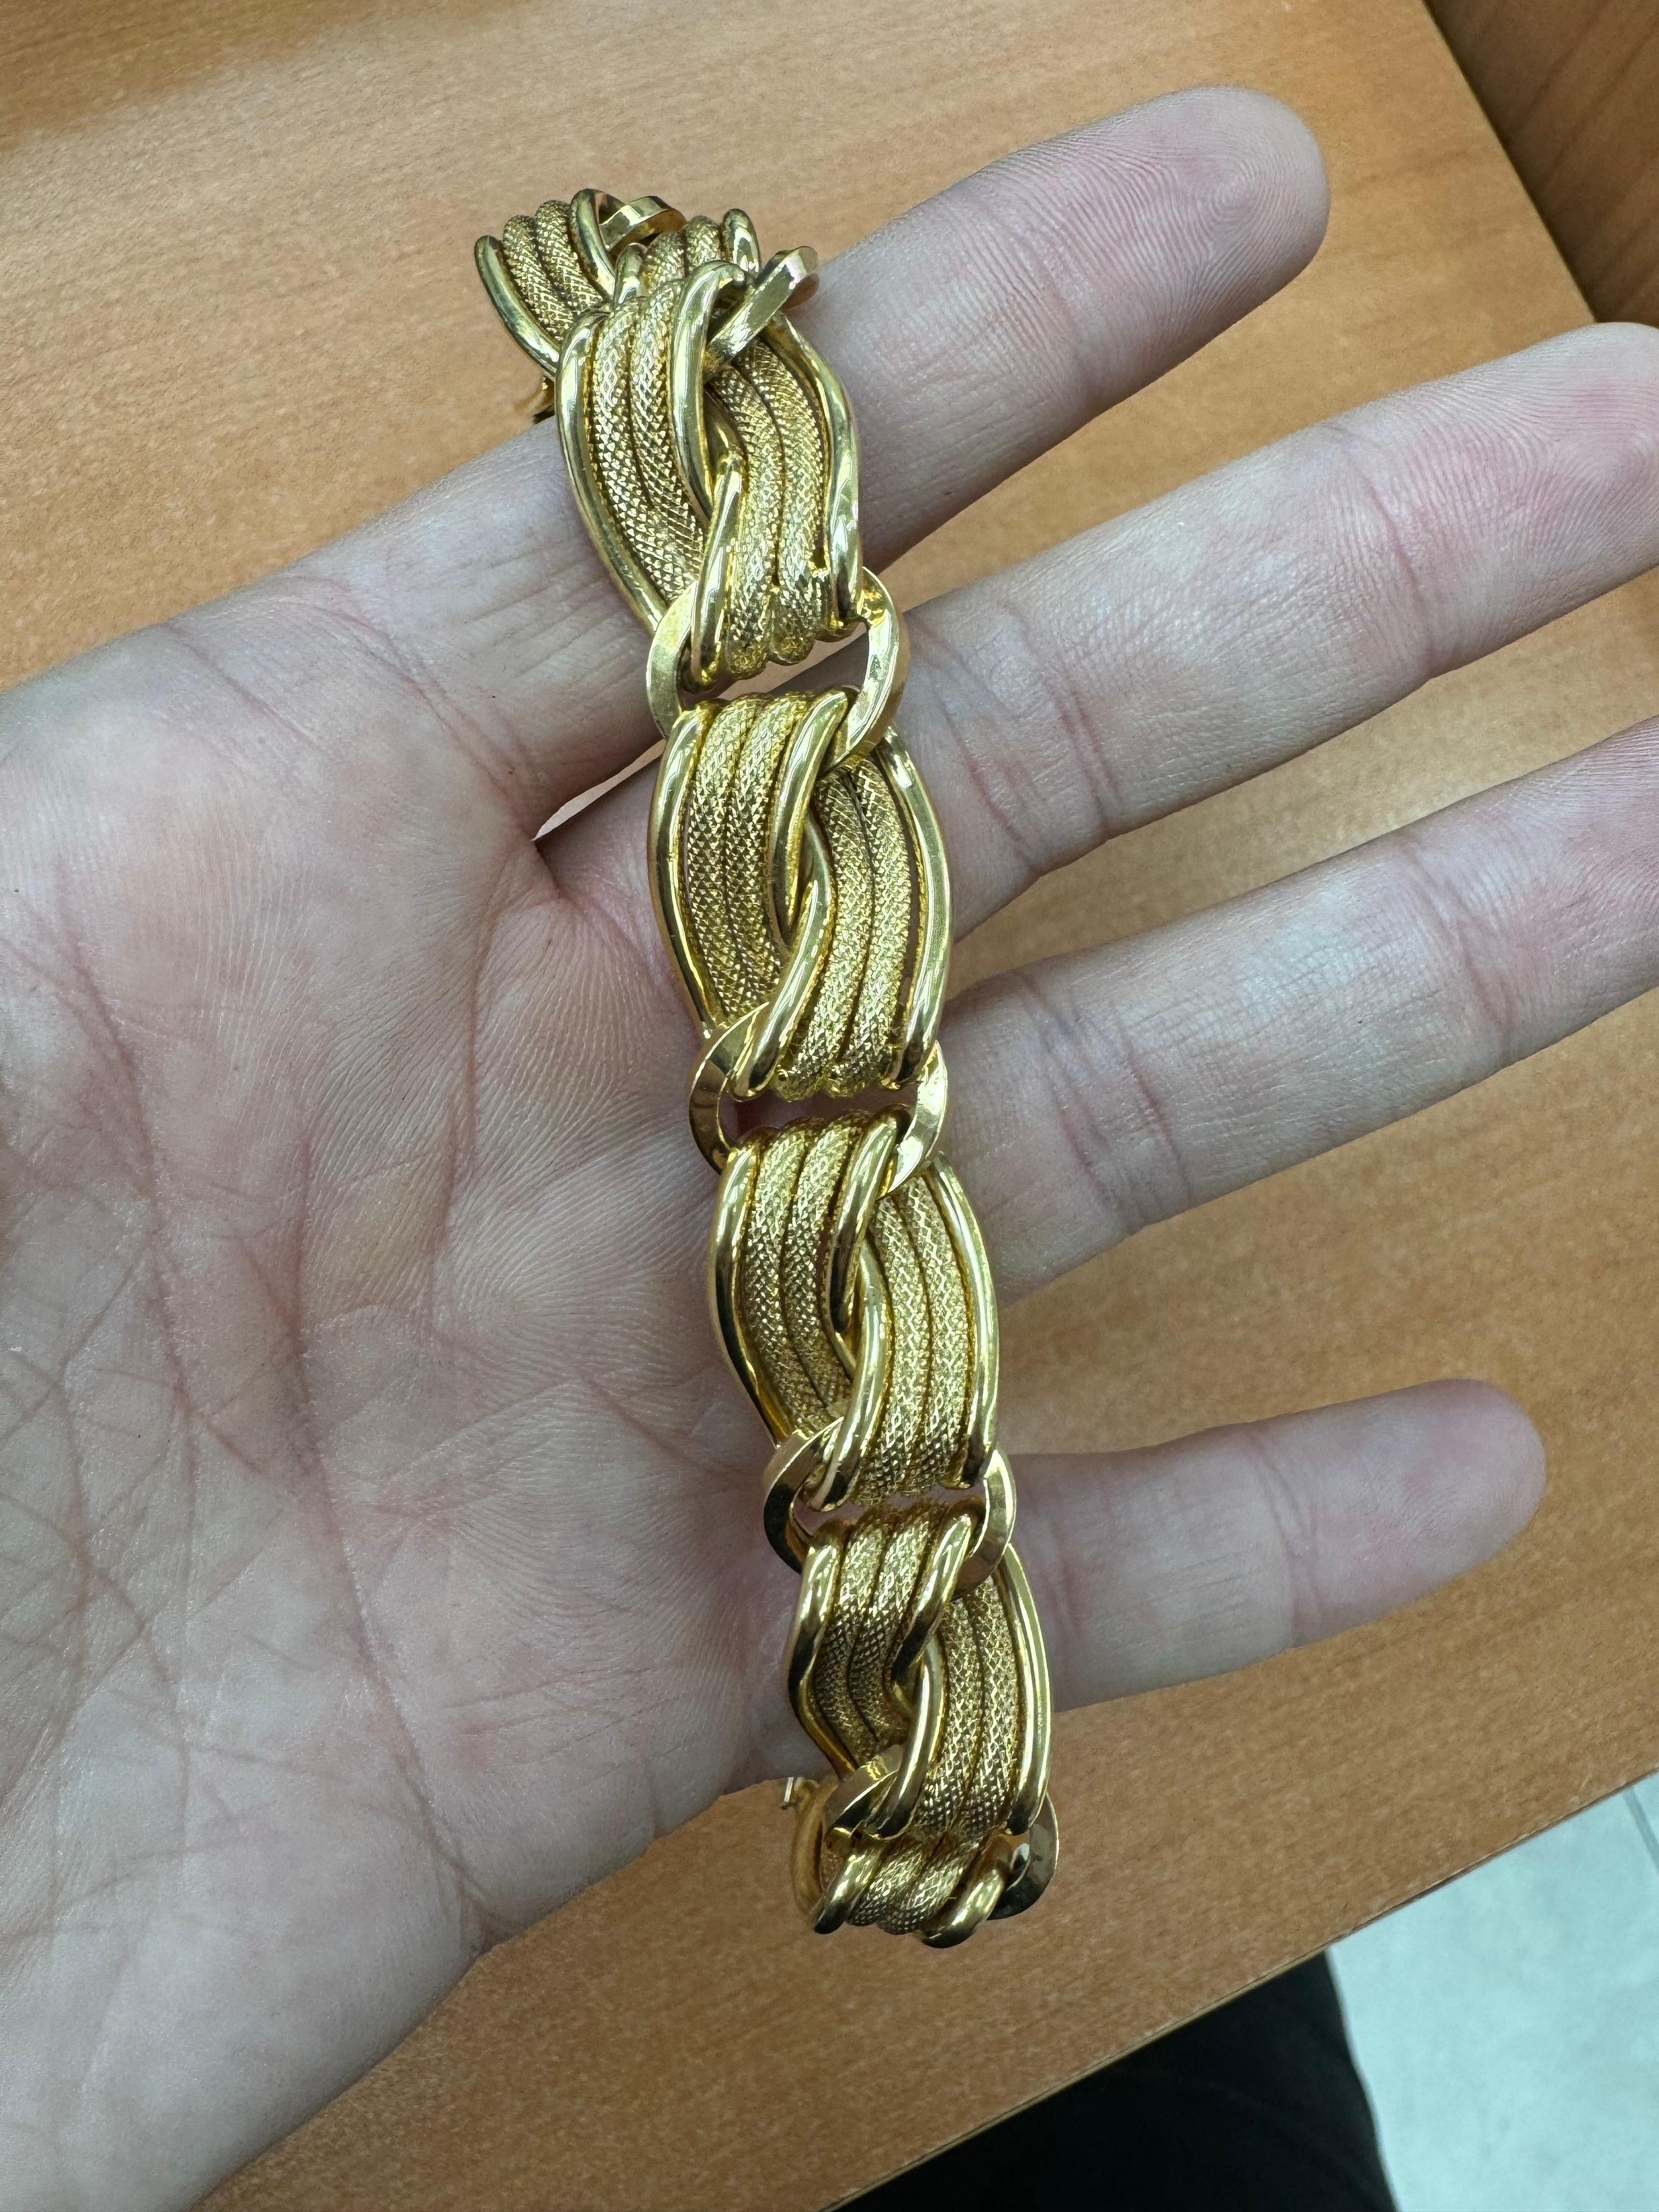 18 Karat Yellow Gold Textured & High Polish Link Bracelet 30.6 Grams 7.5